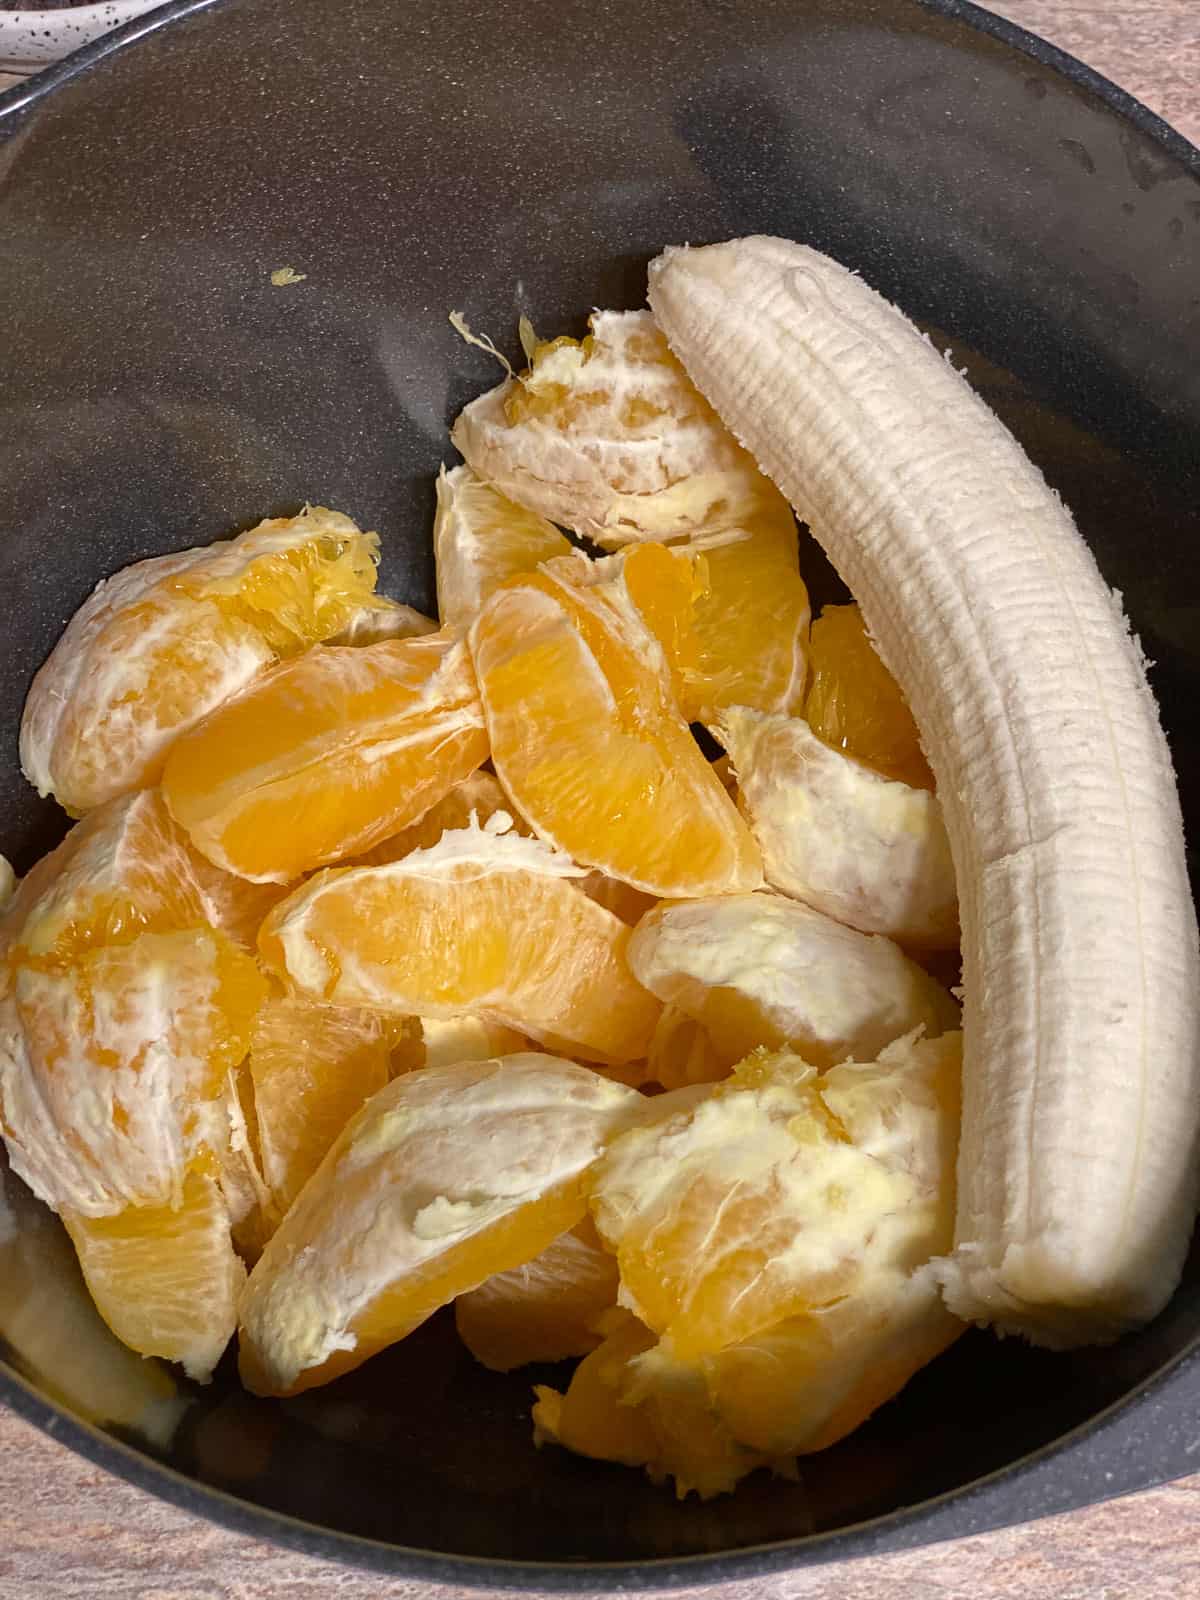 oranges and banana in a blender